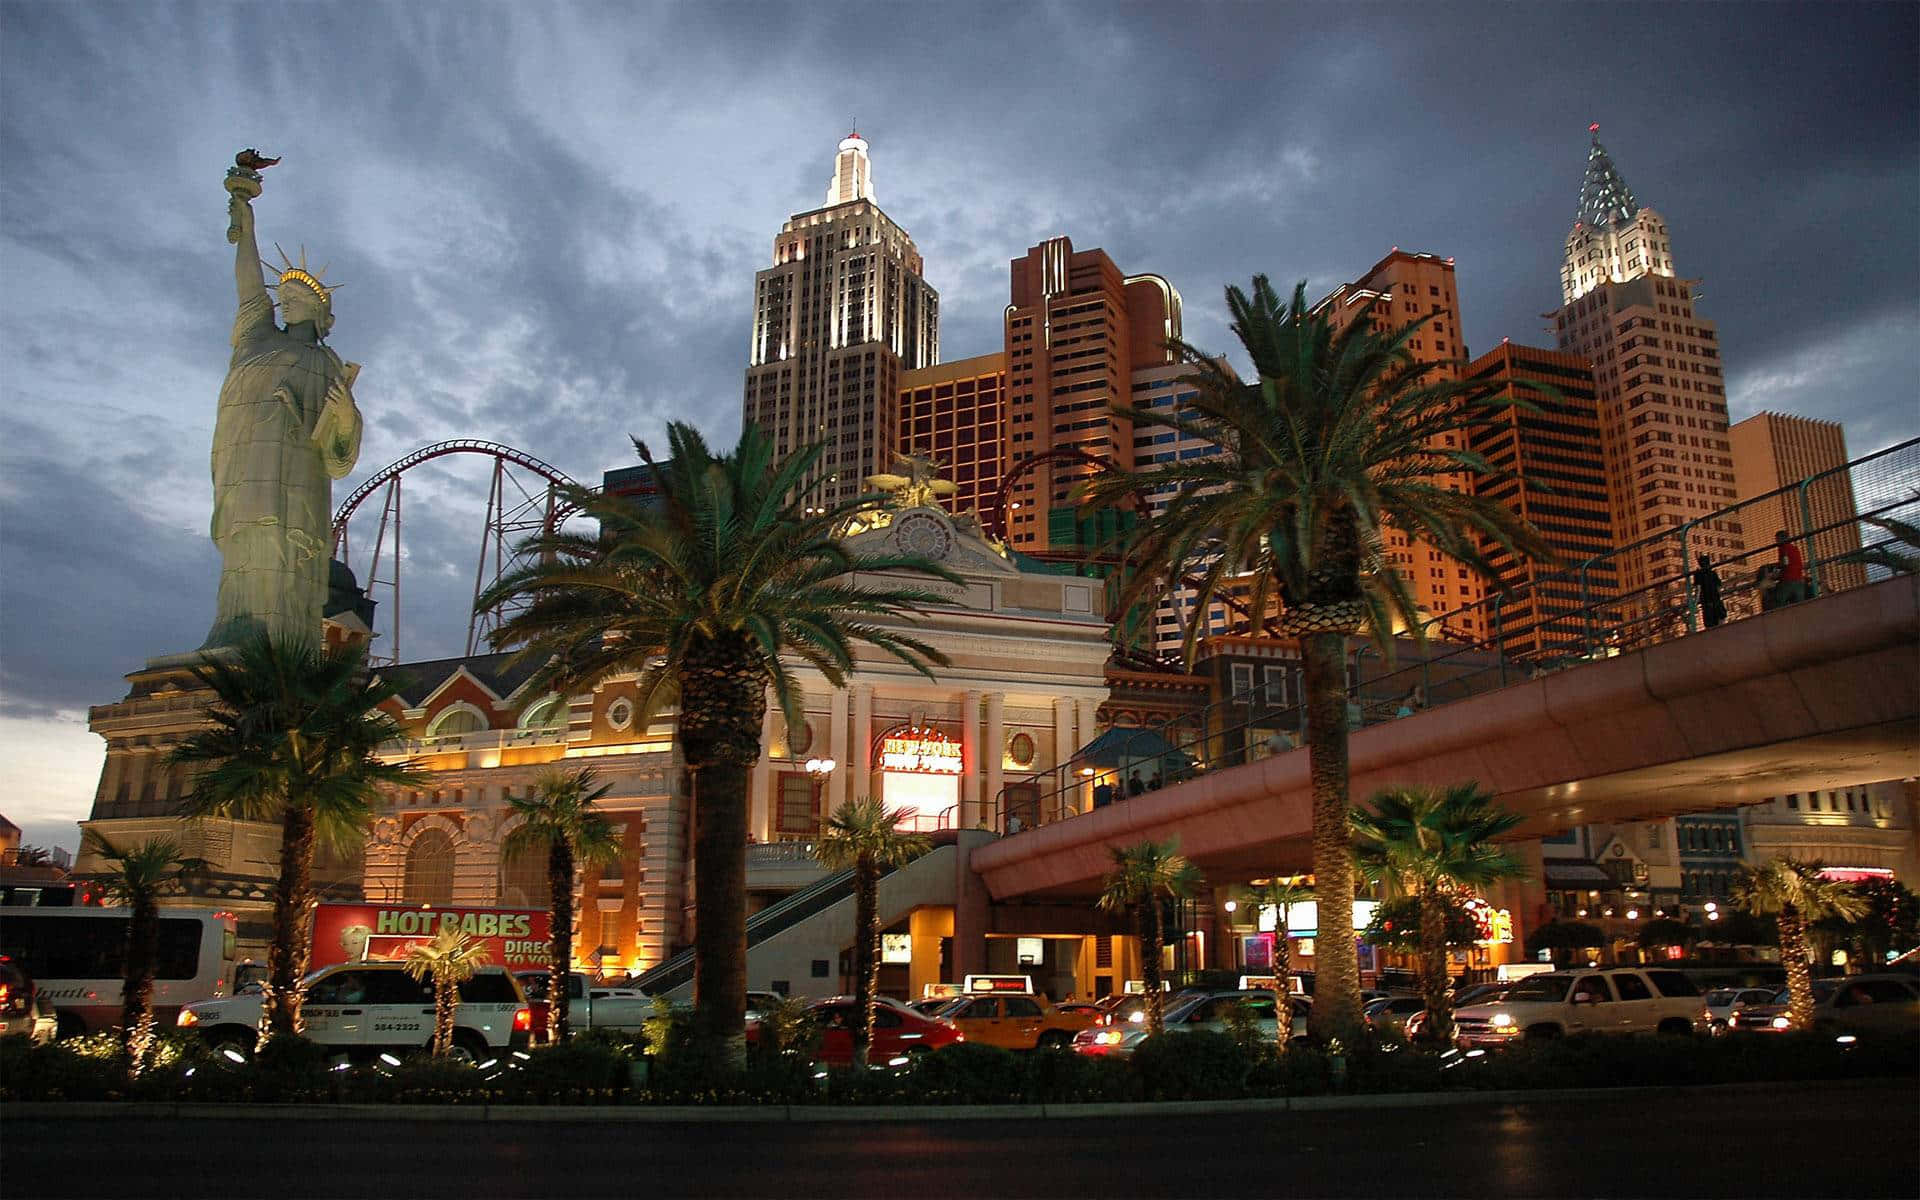 Hintergrundvon Vegas Casino De Monte Carlo